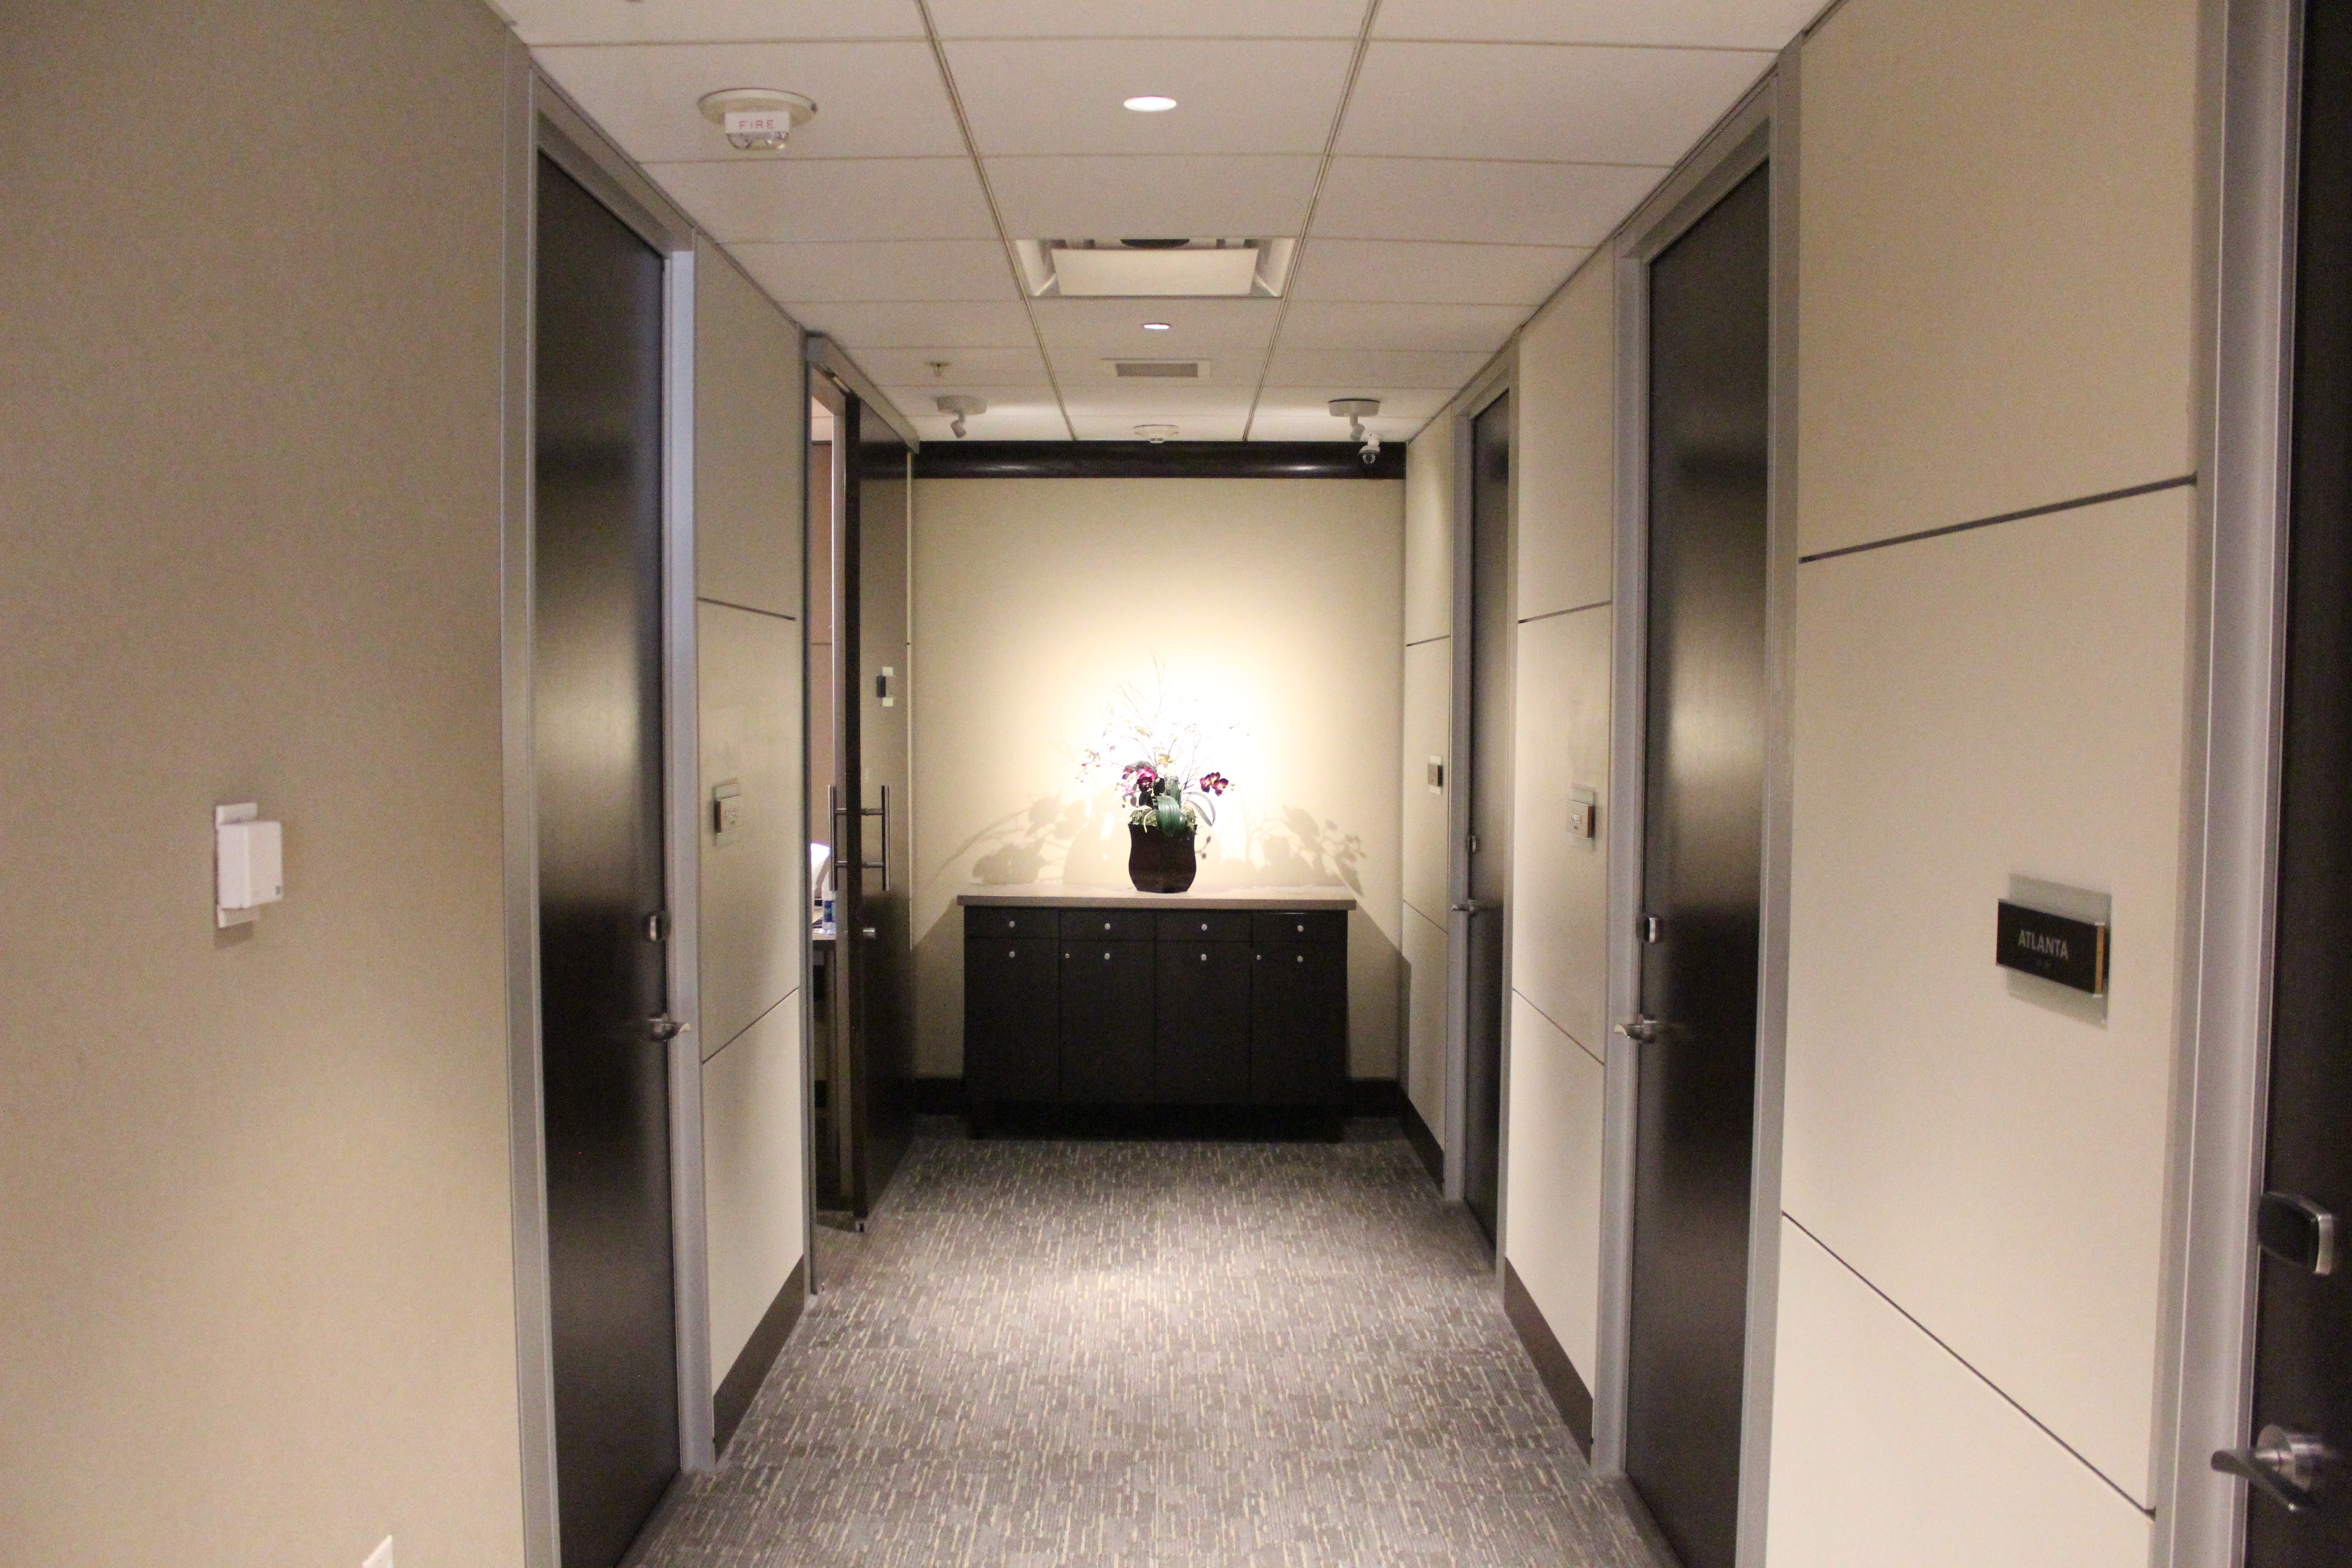 Minute Suites ATL Hallway to Rooms